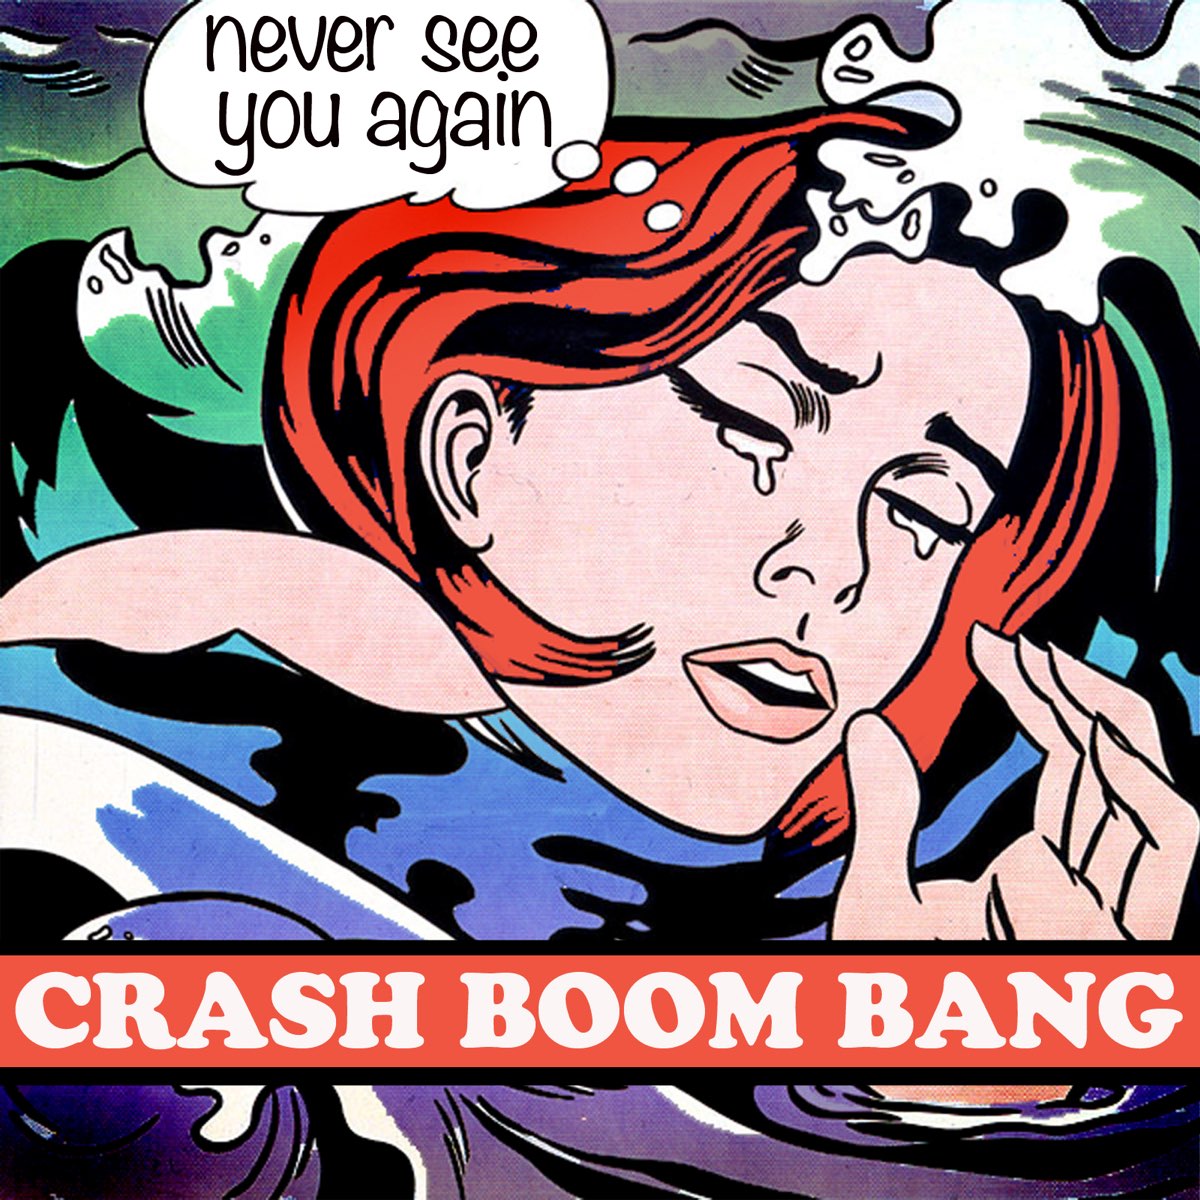 Crash boom bang